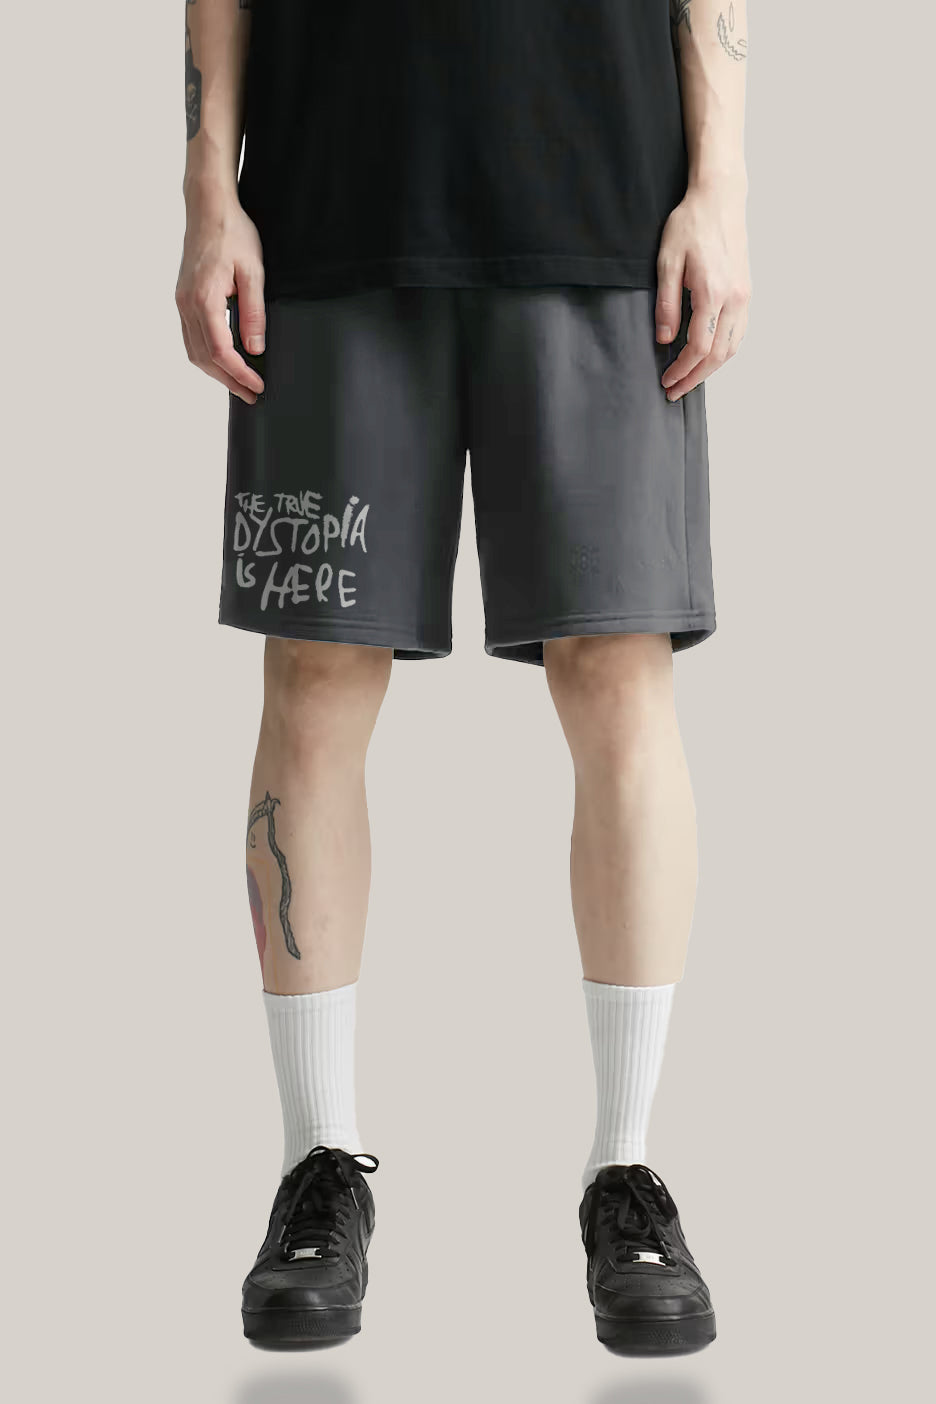 Dystopia Shorts - Grey